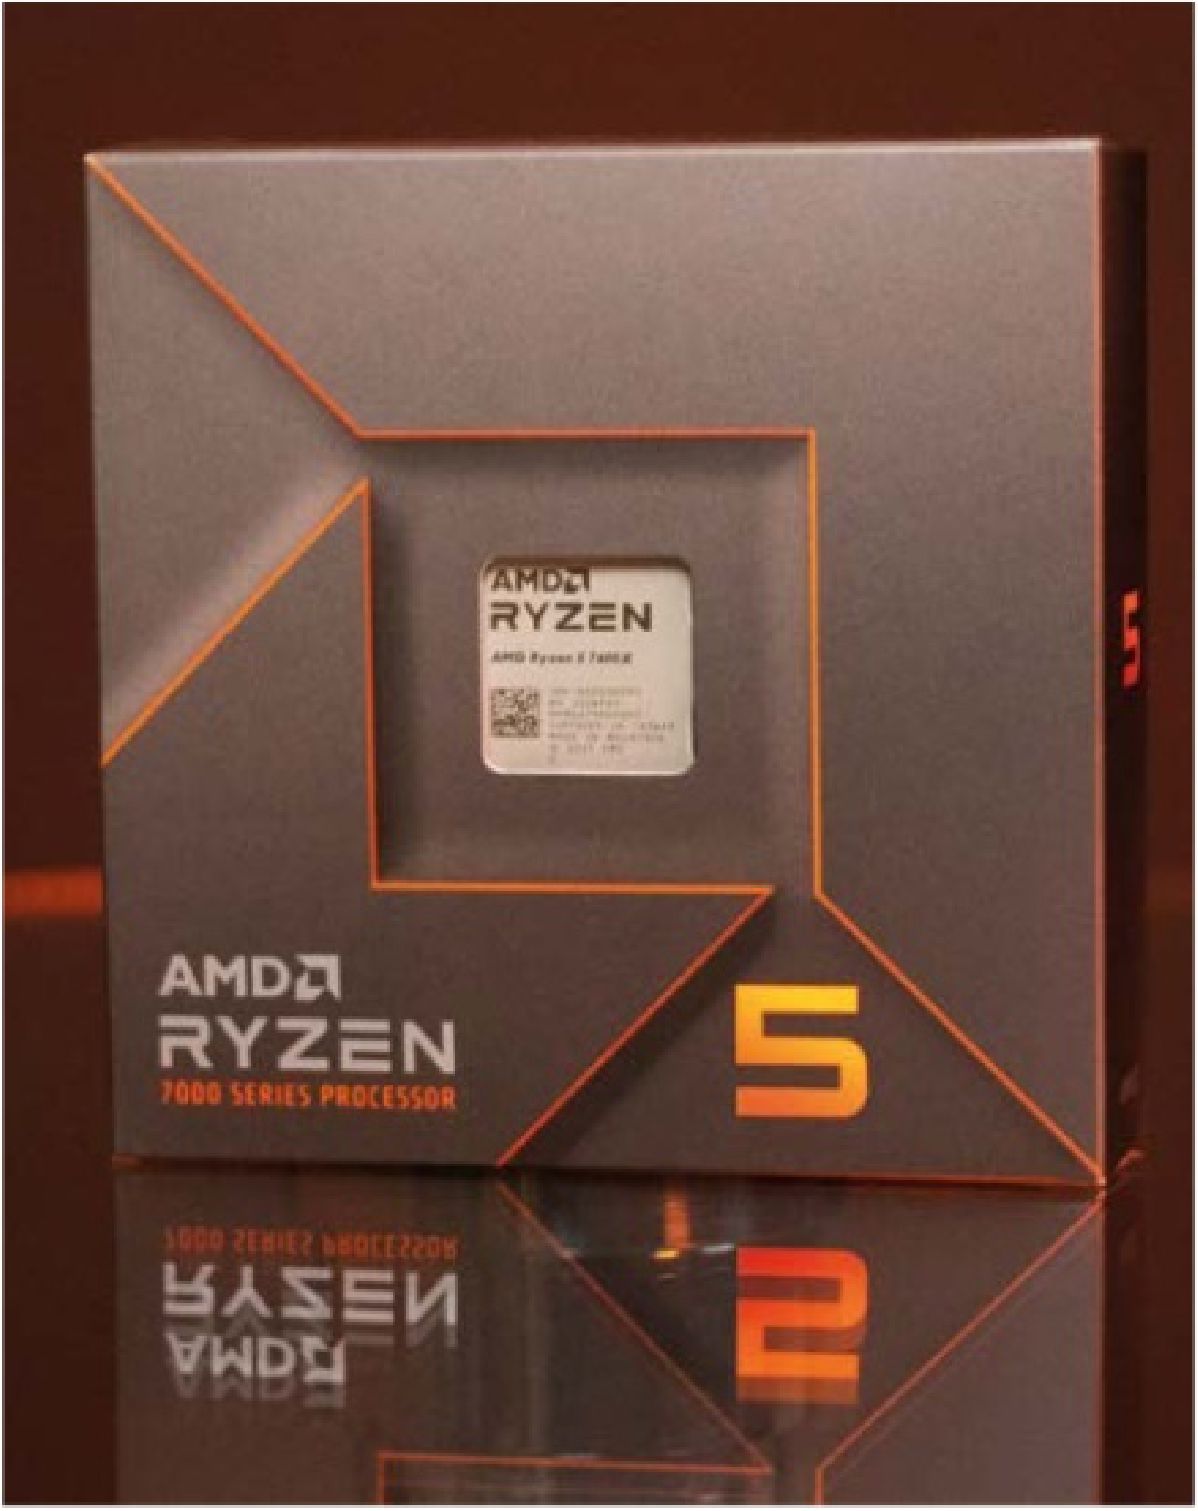 AMD RYZEN 5 7600X Review